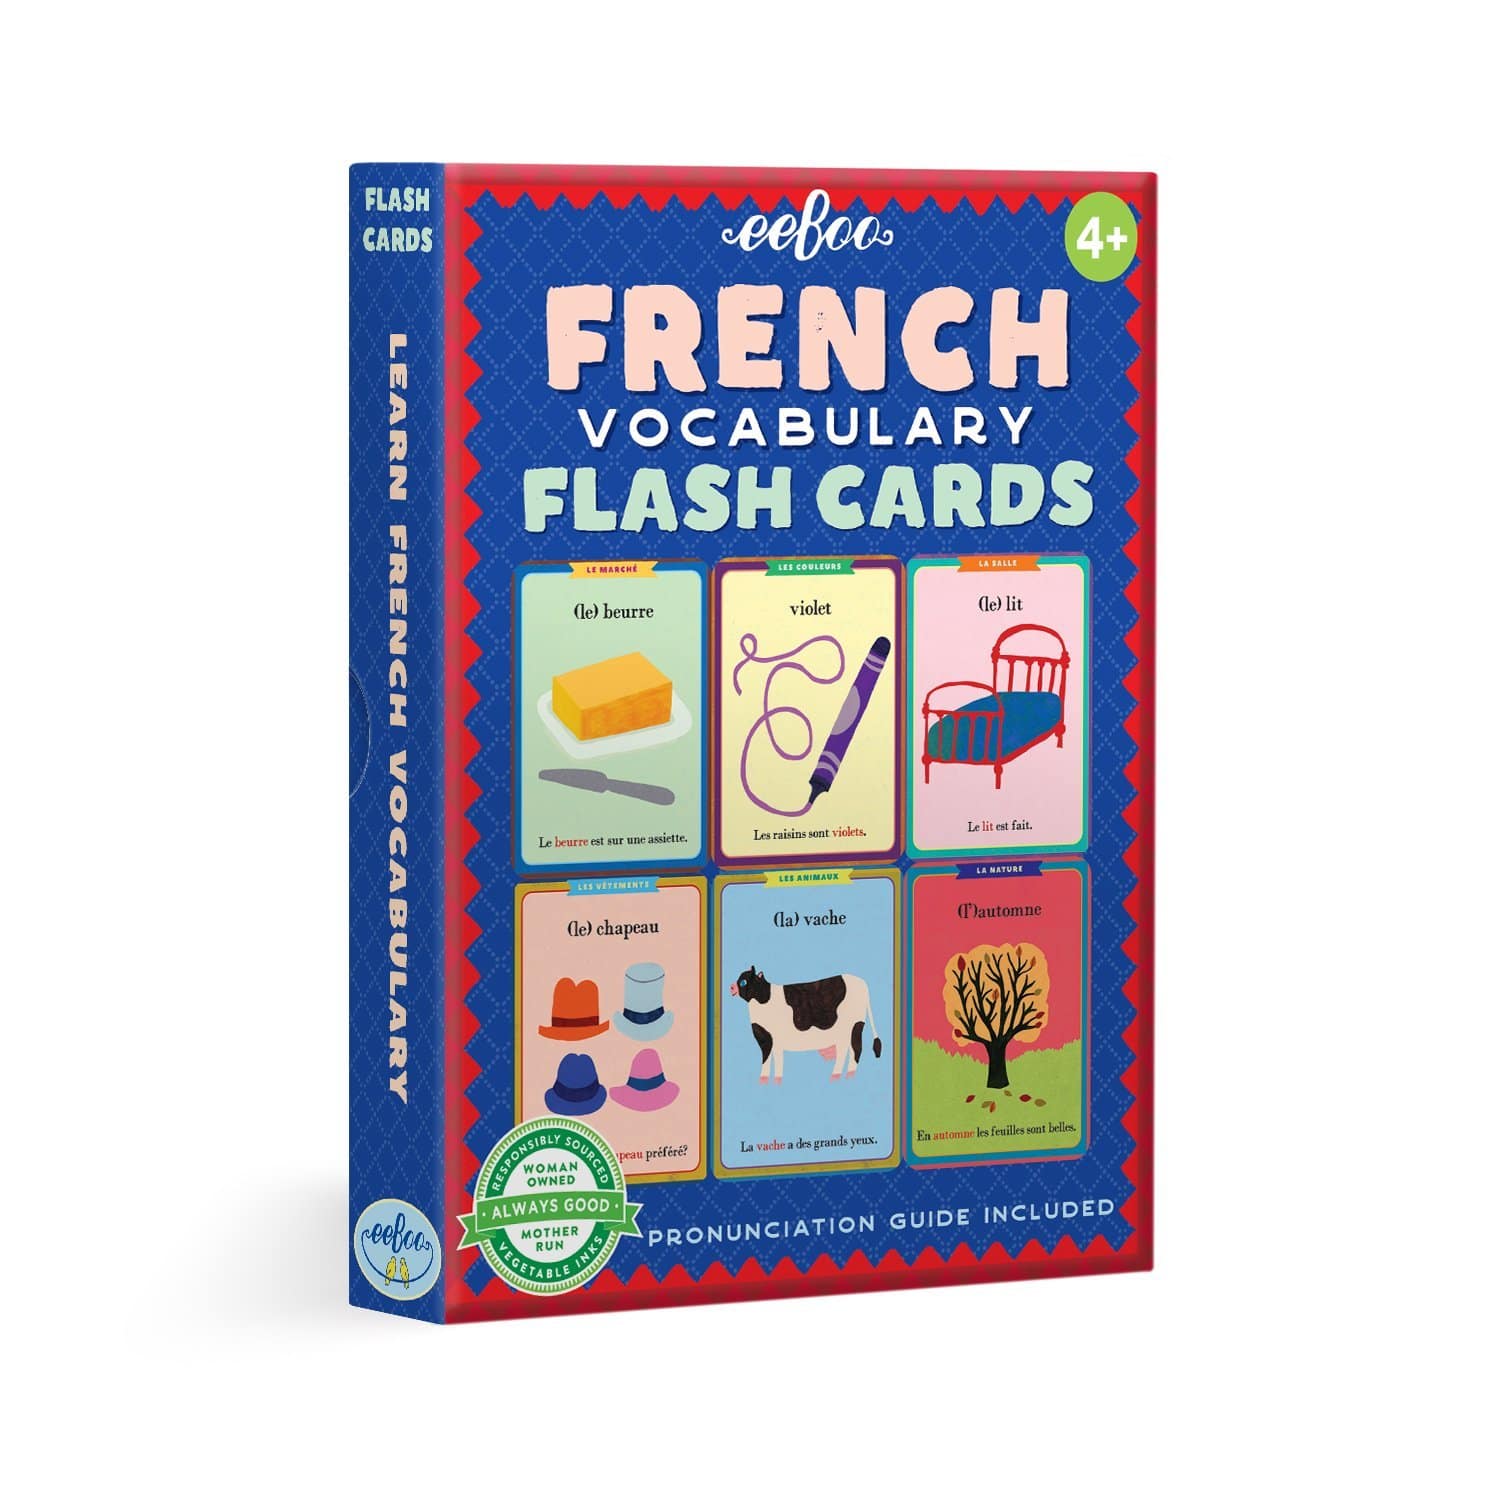 French Vocabulary Flashcards